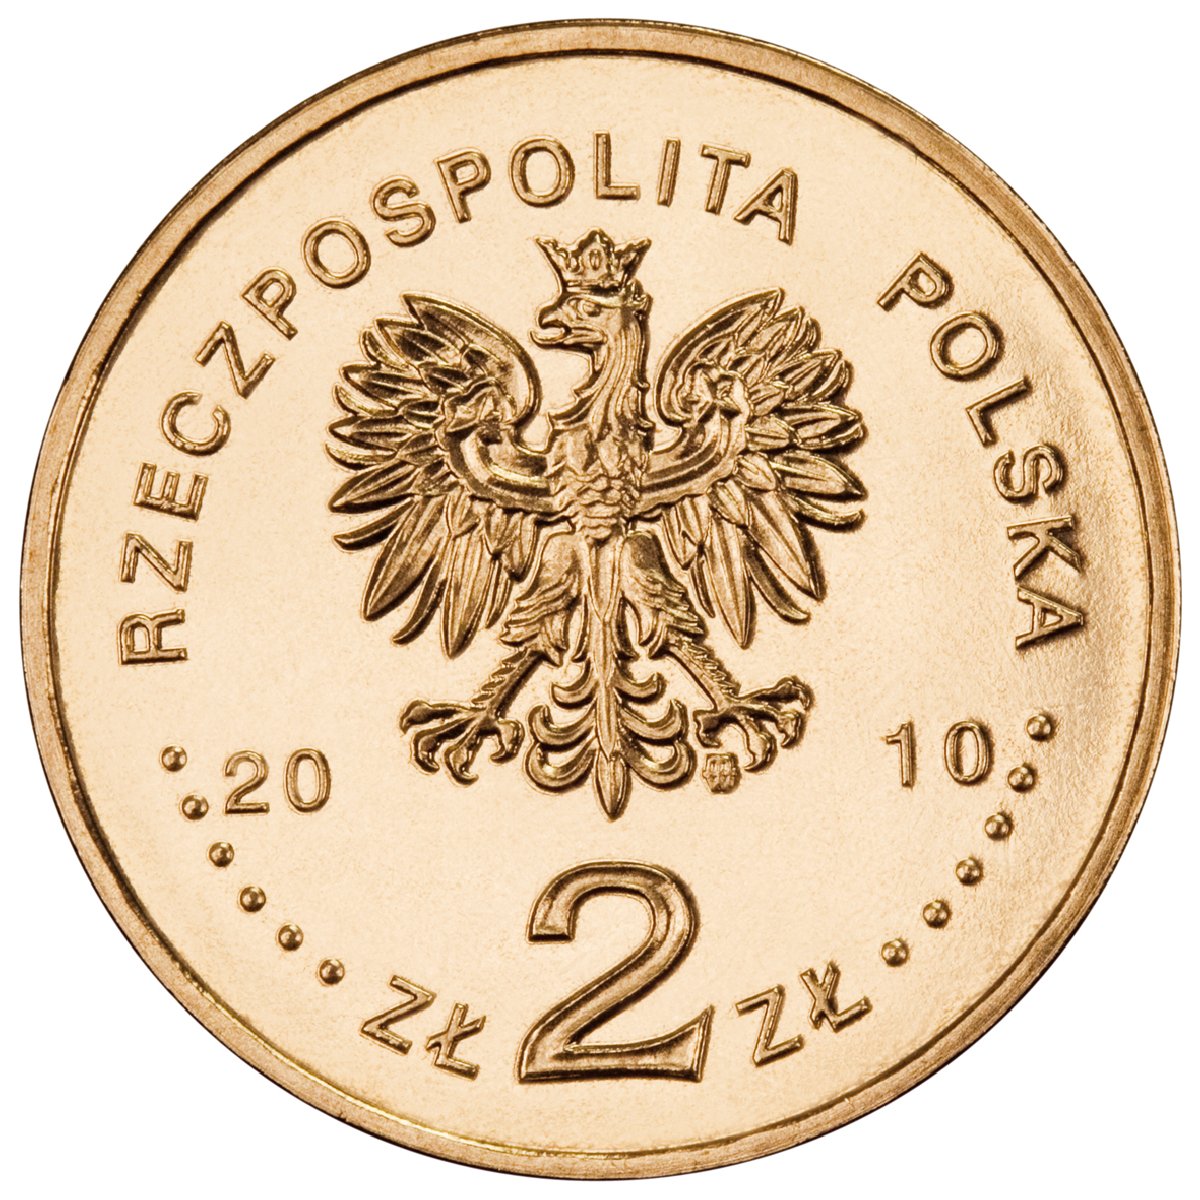 2zl-szwolezer-gwardii-cesarza-napoleona-i-awers-monety